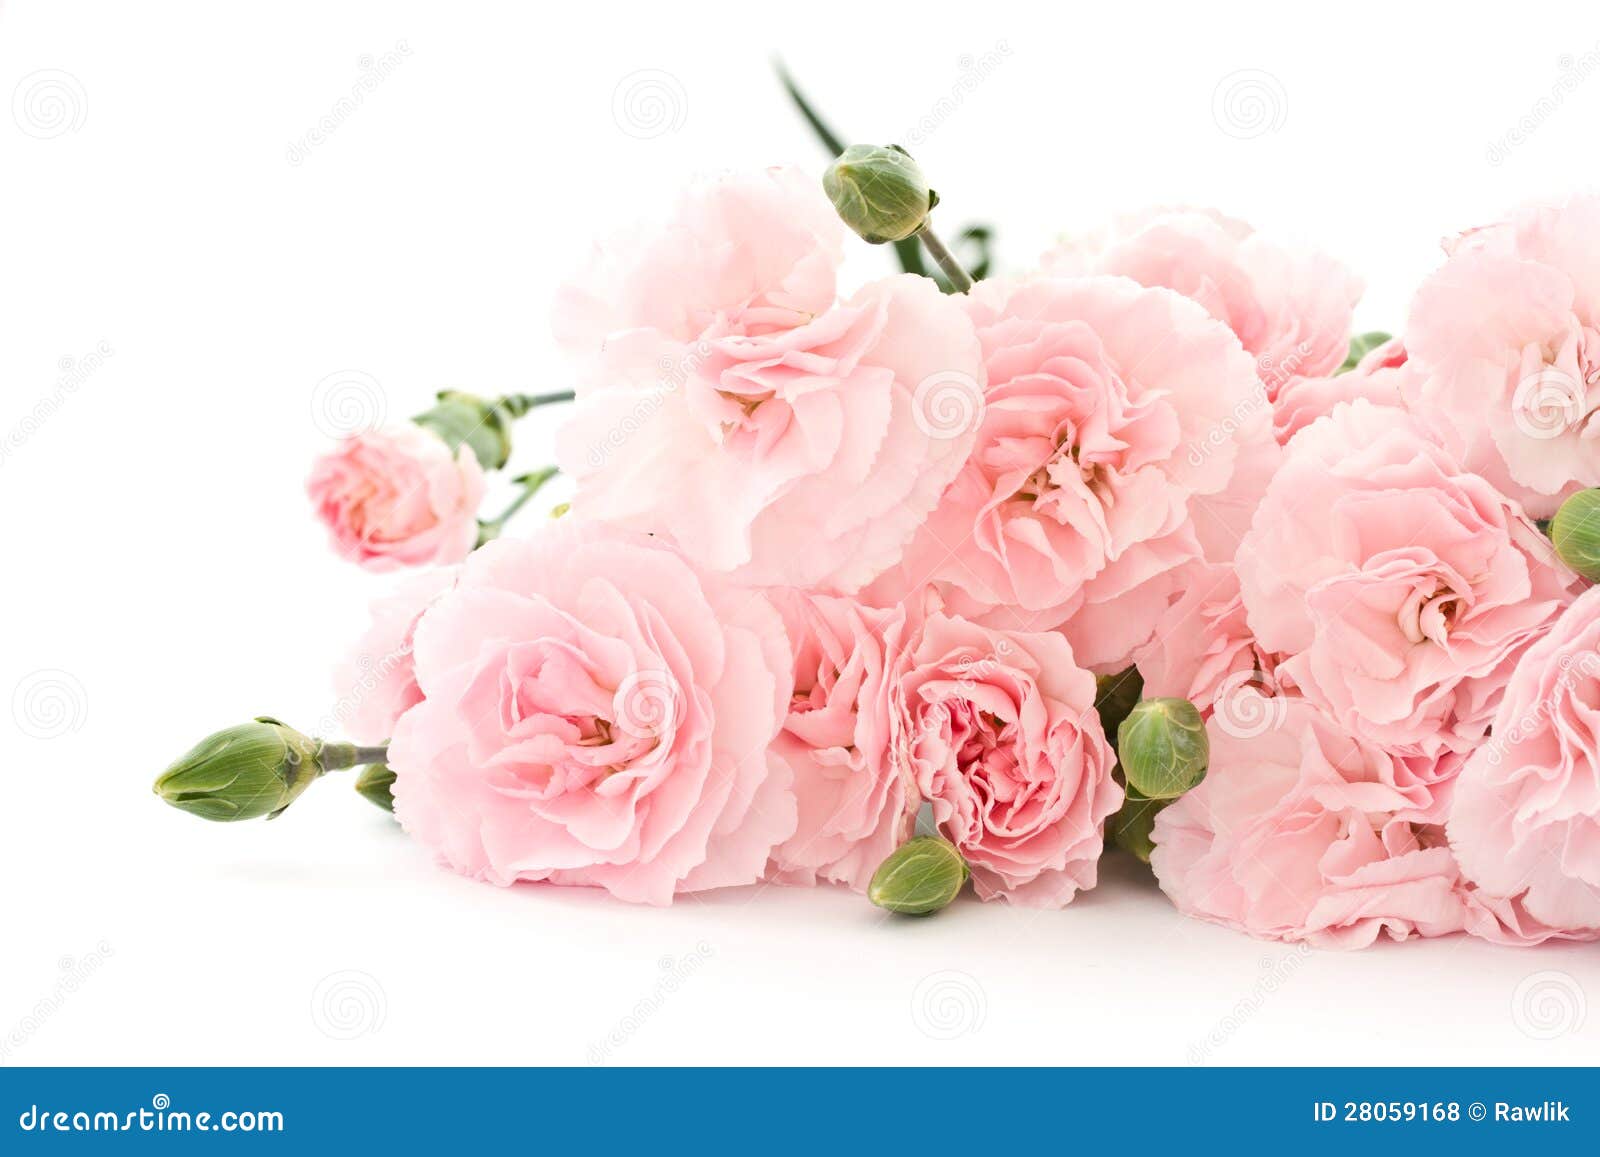 Carnation Flowers Royalty Free Stock Photos - Image: 28059168